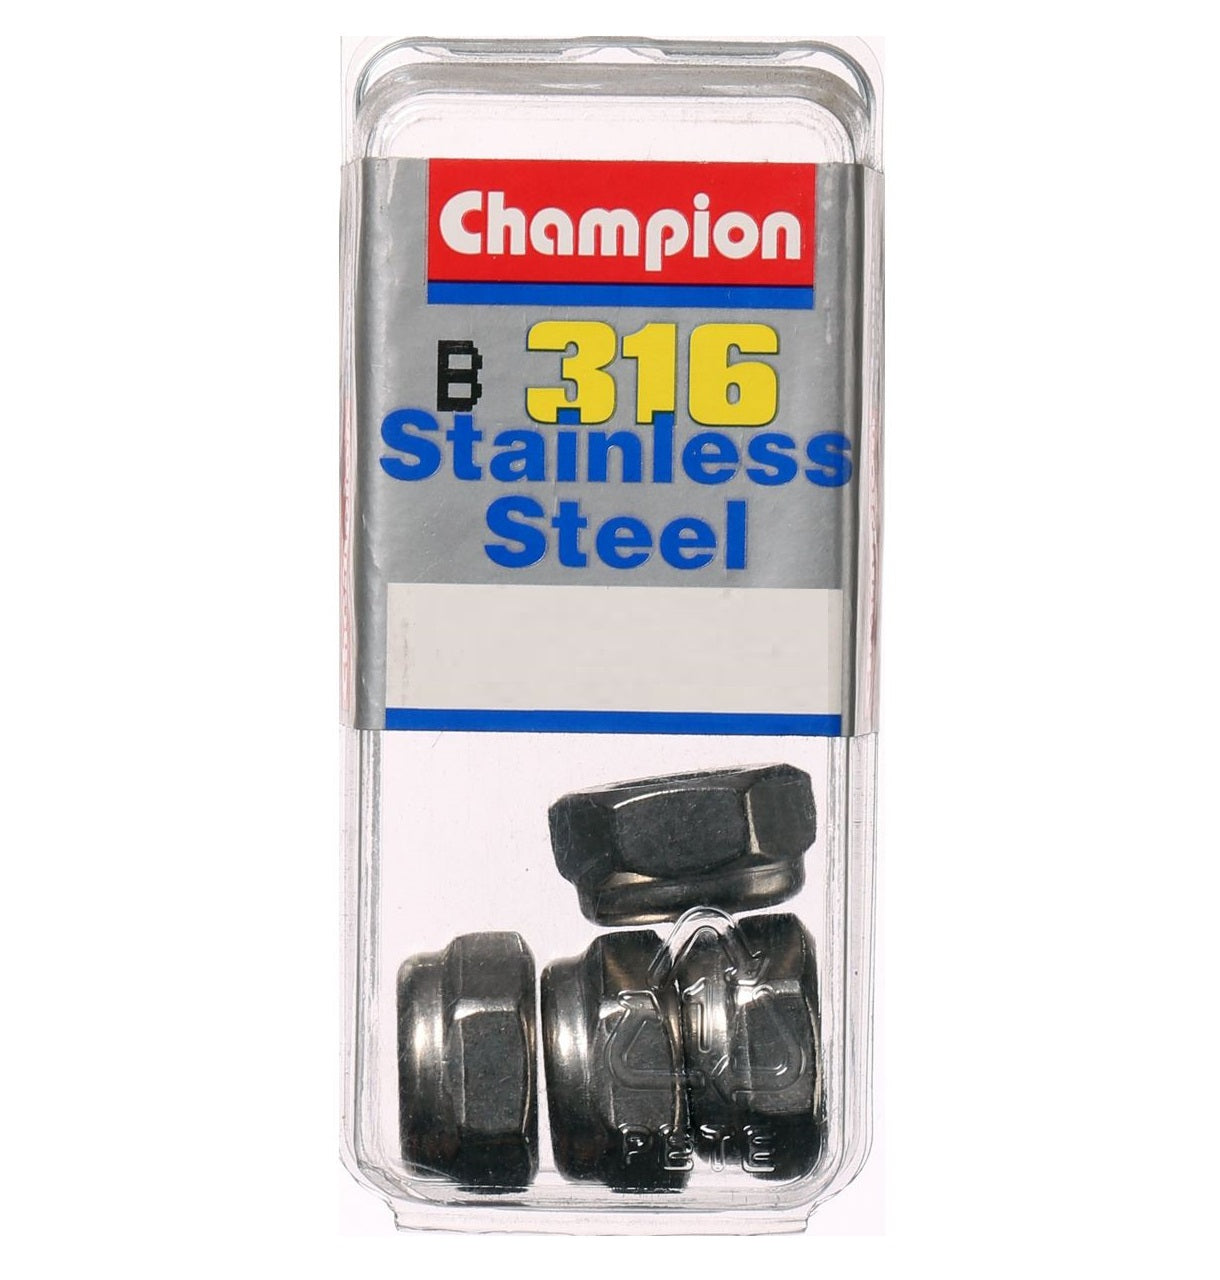 Champion Stainless Steel 316 Self-Locking Nuts